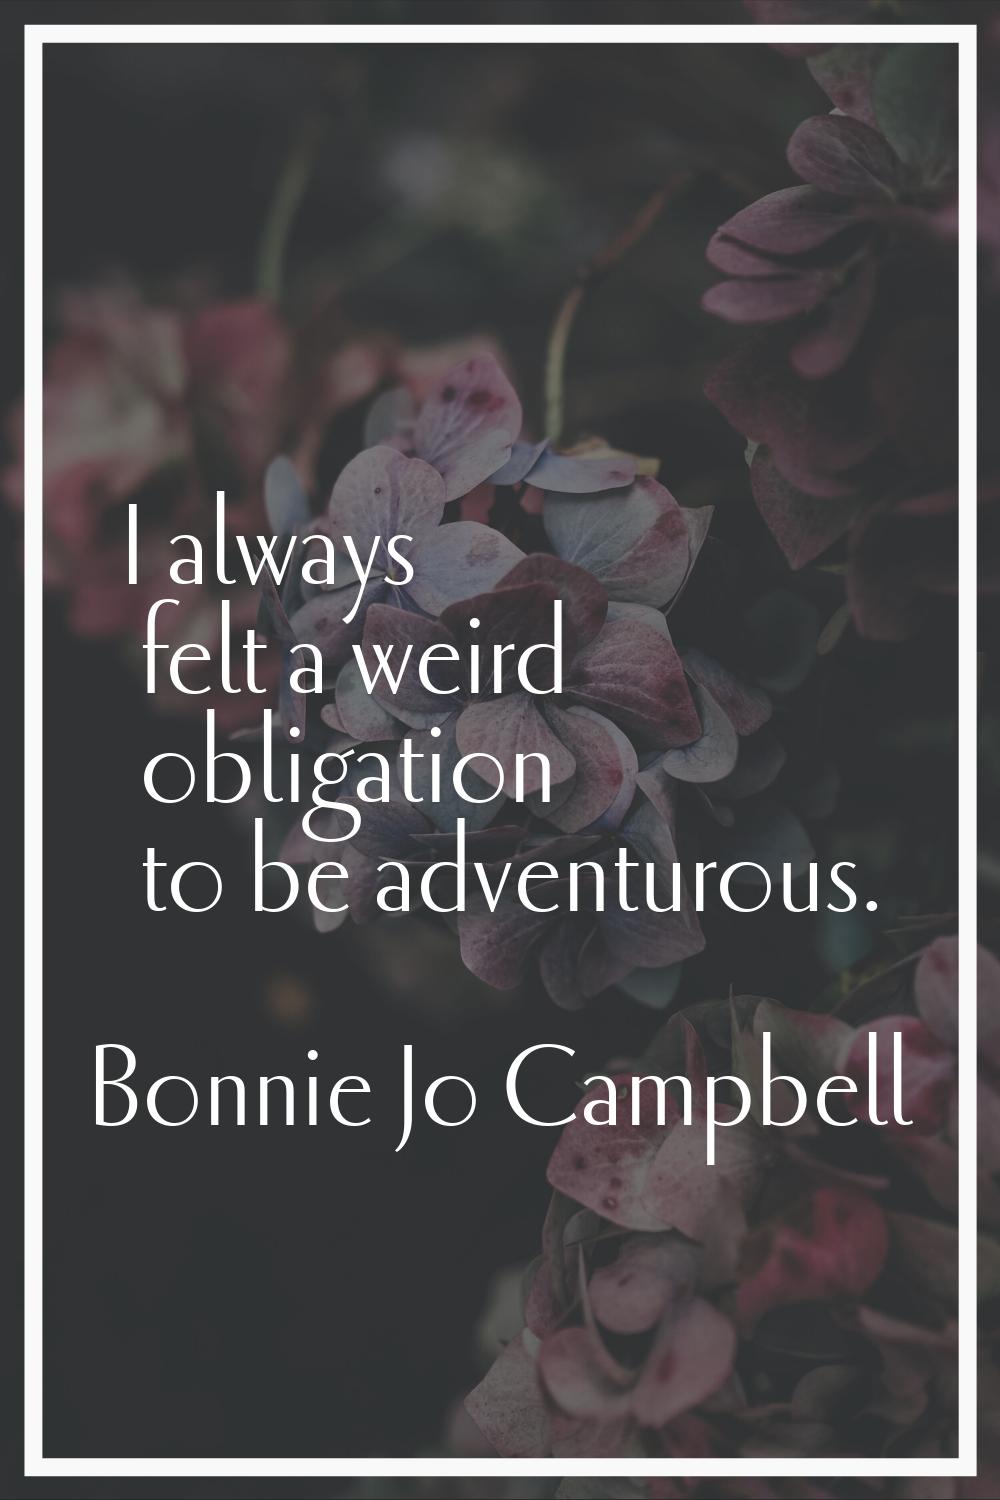 I always felt a weird obligation to be adventurous.